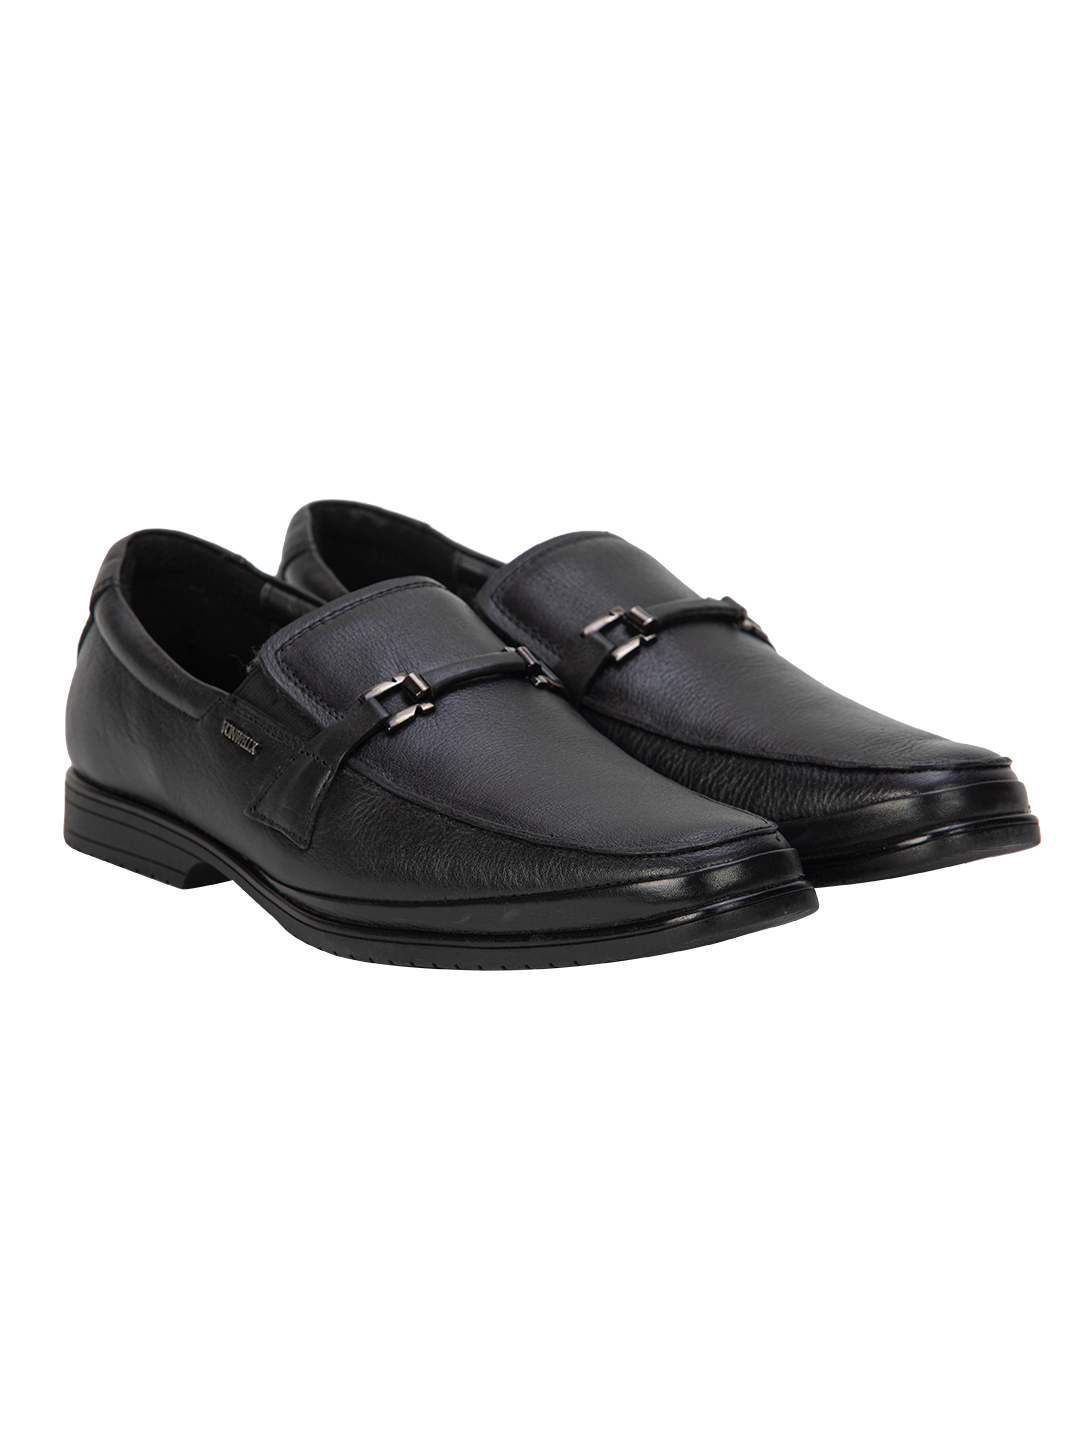 Buy Von Wellx Germany Comfort Black Jace Shoes Online in Warangal